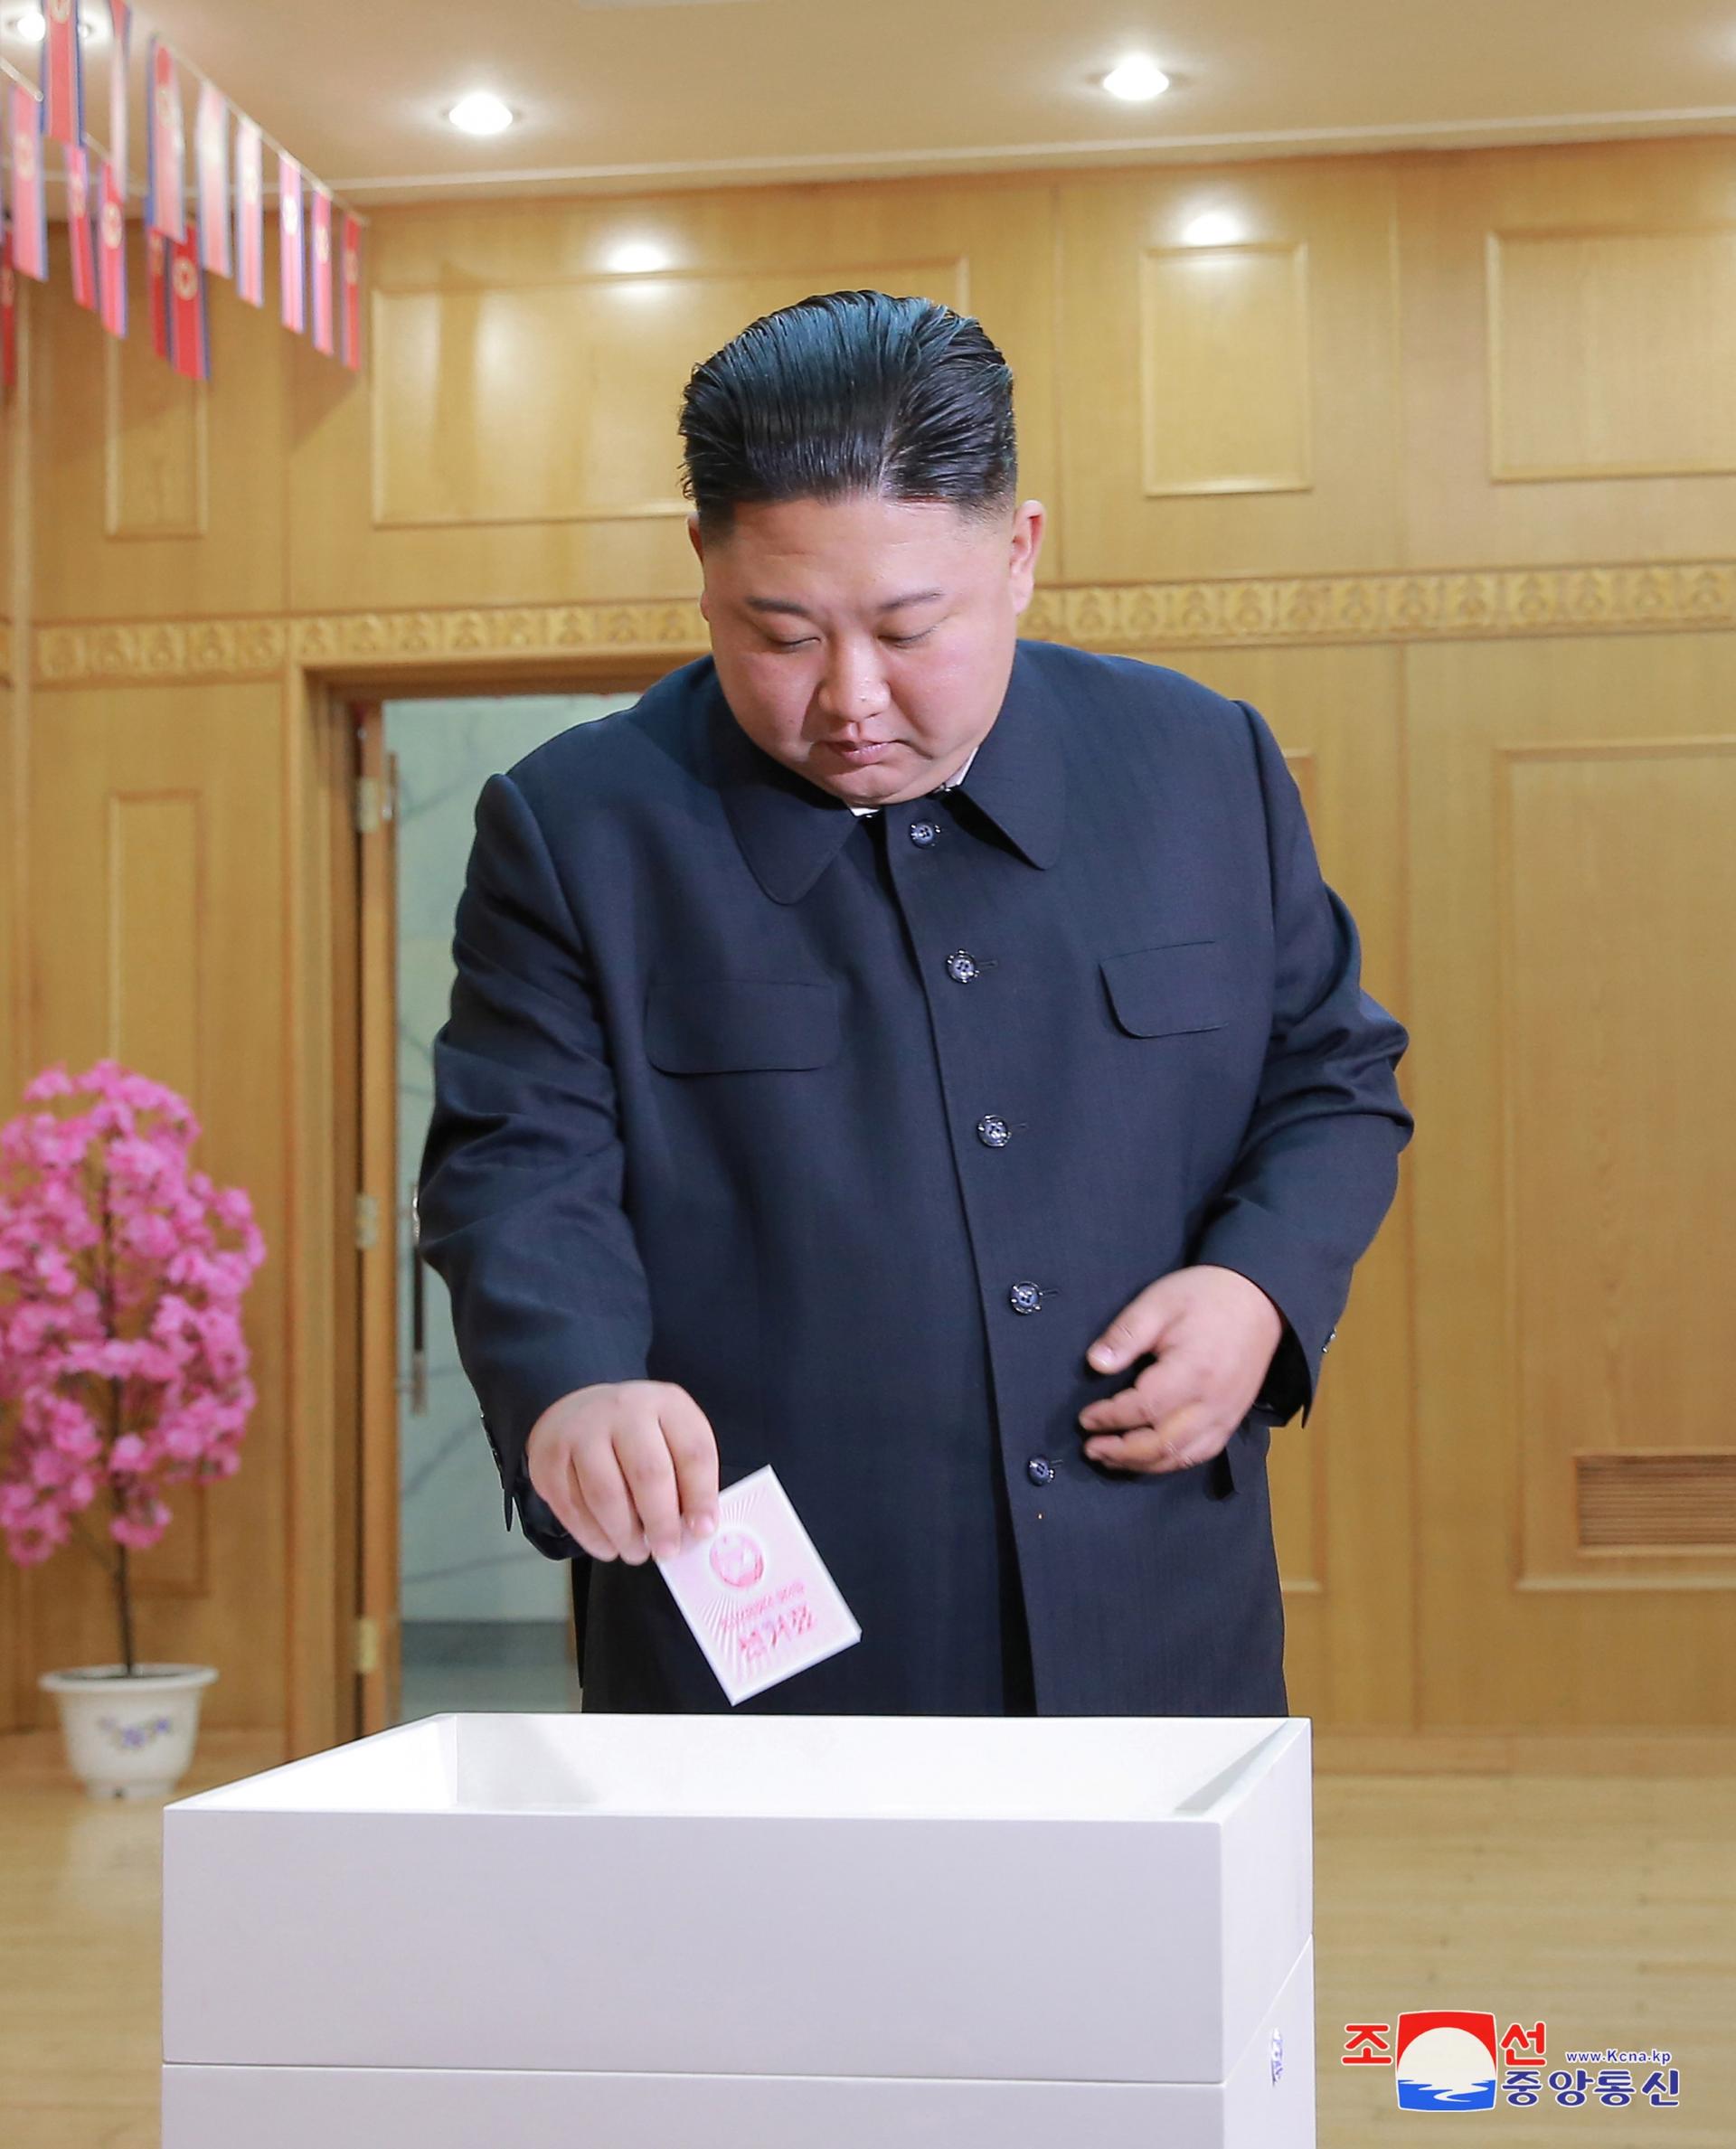 Kim Jon-un casts his ballot